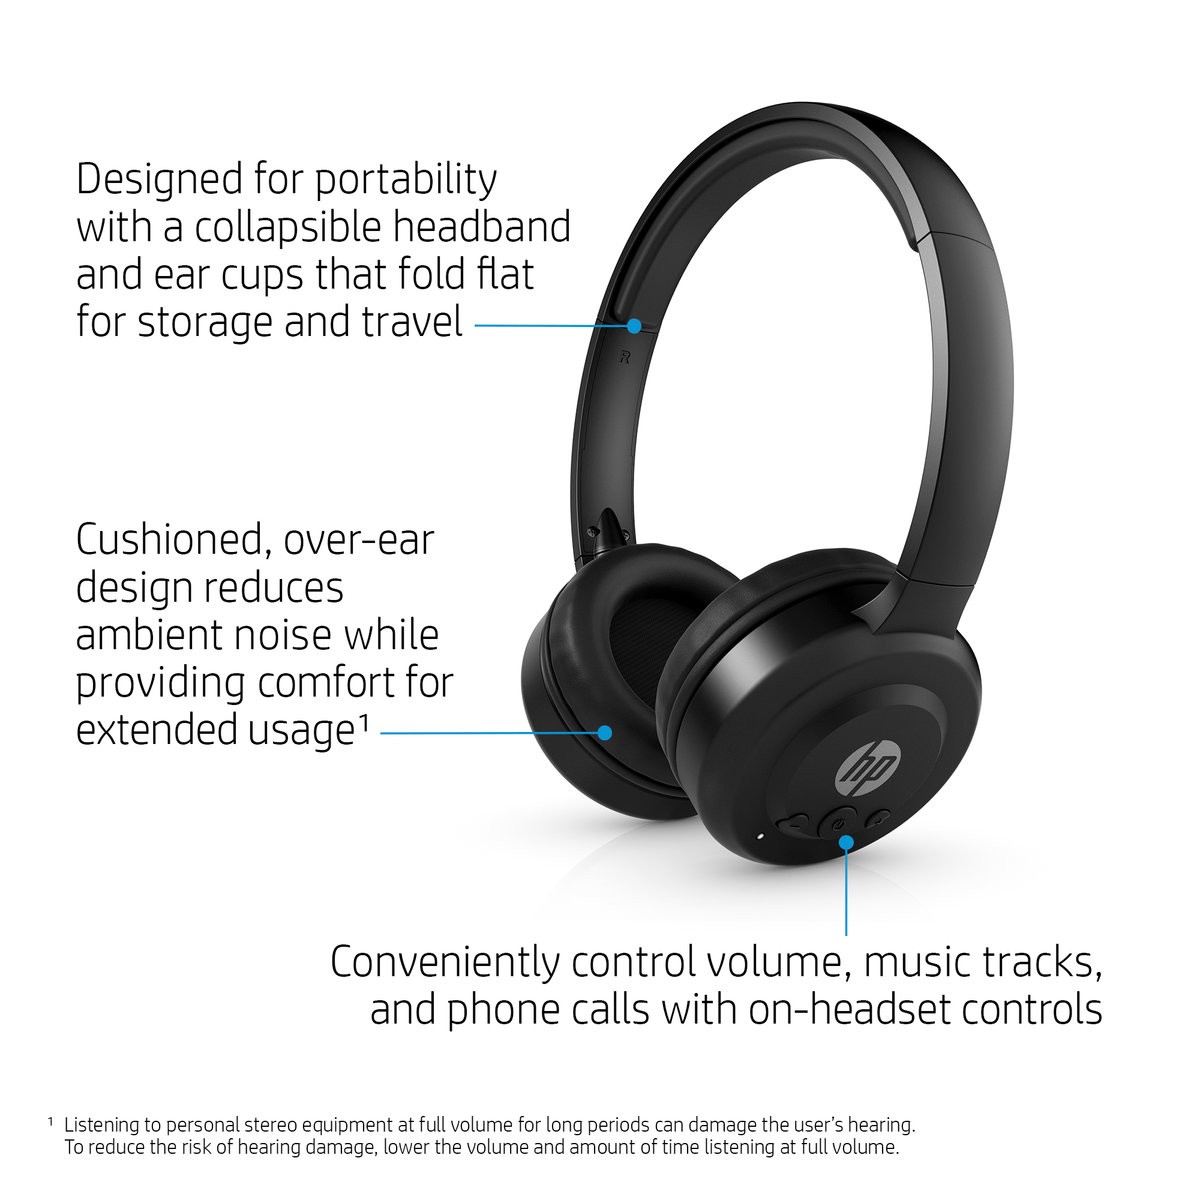 HP Pavilion 600 Bluetooth Headset Black - 1SH06AA